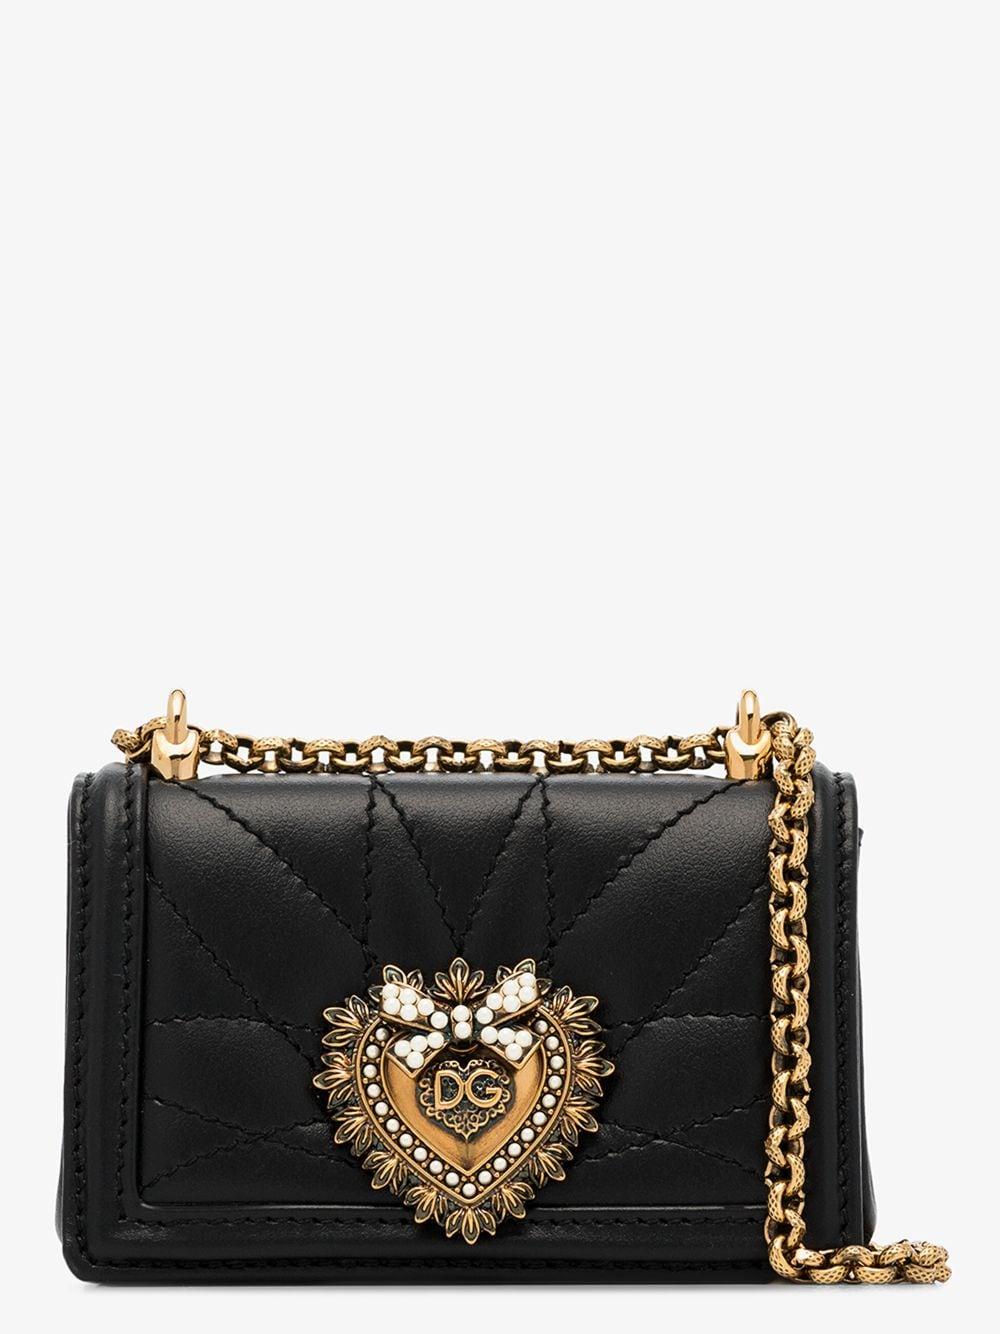 Dolce & Gabbana Black Bag